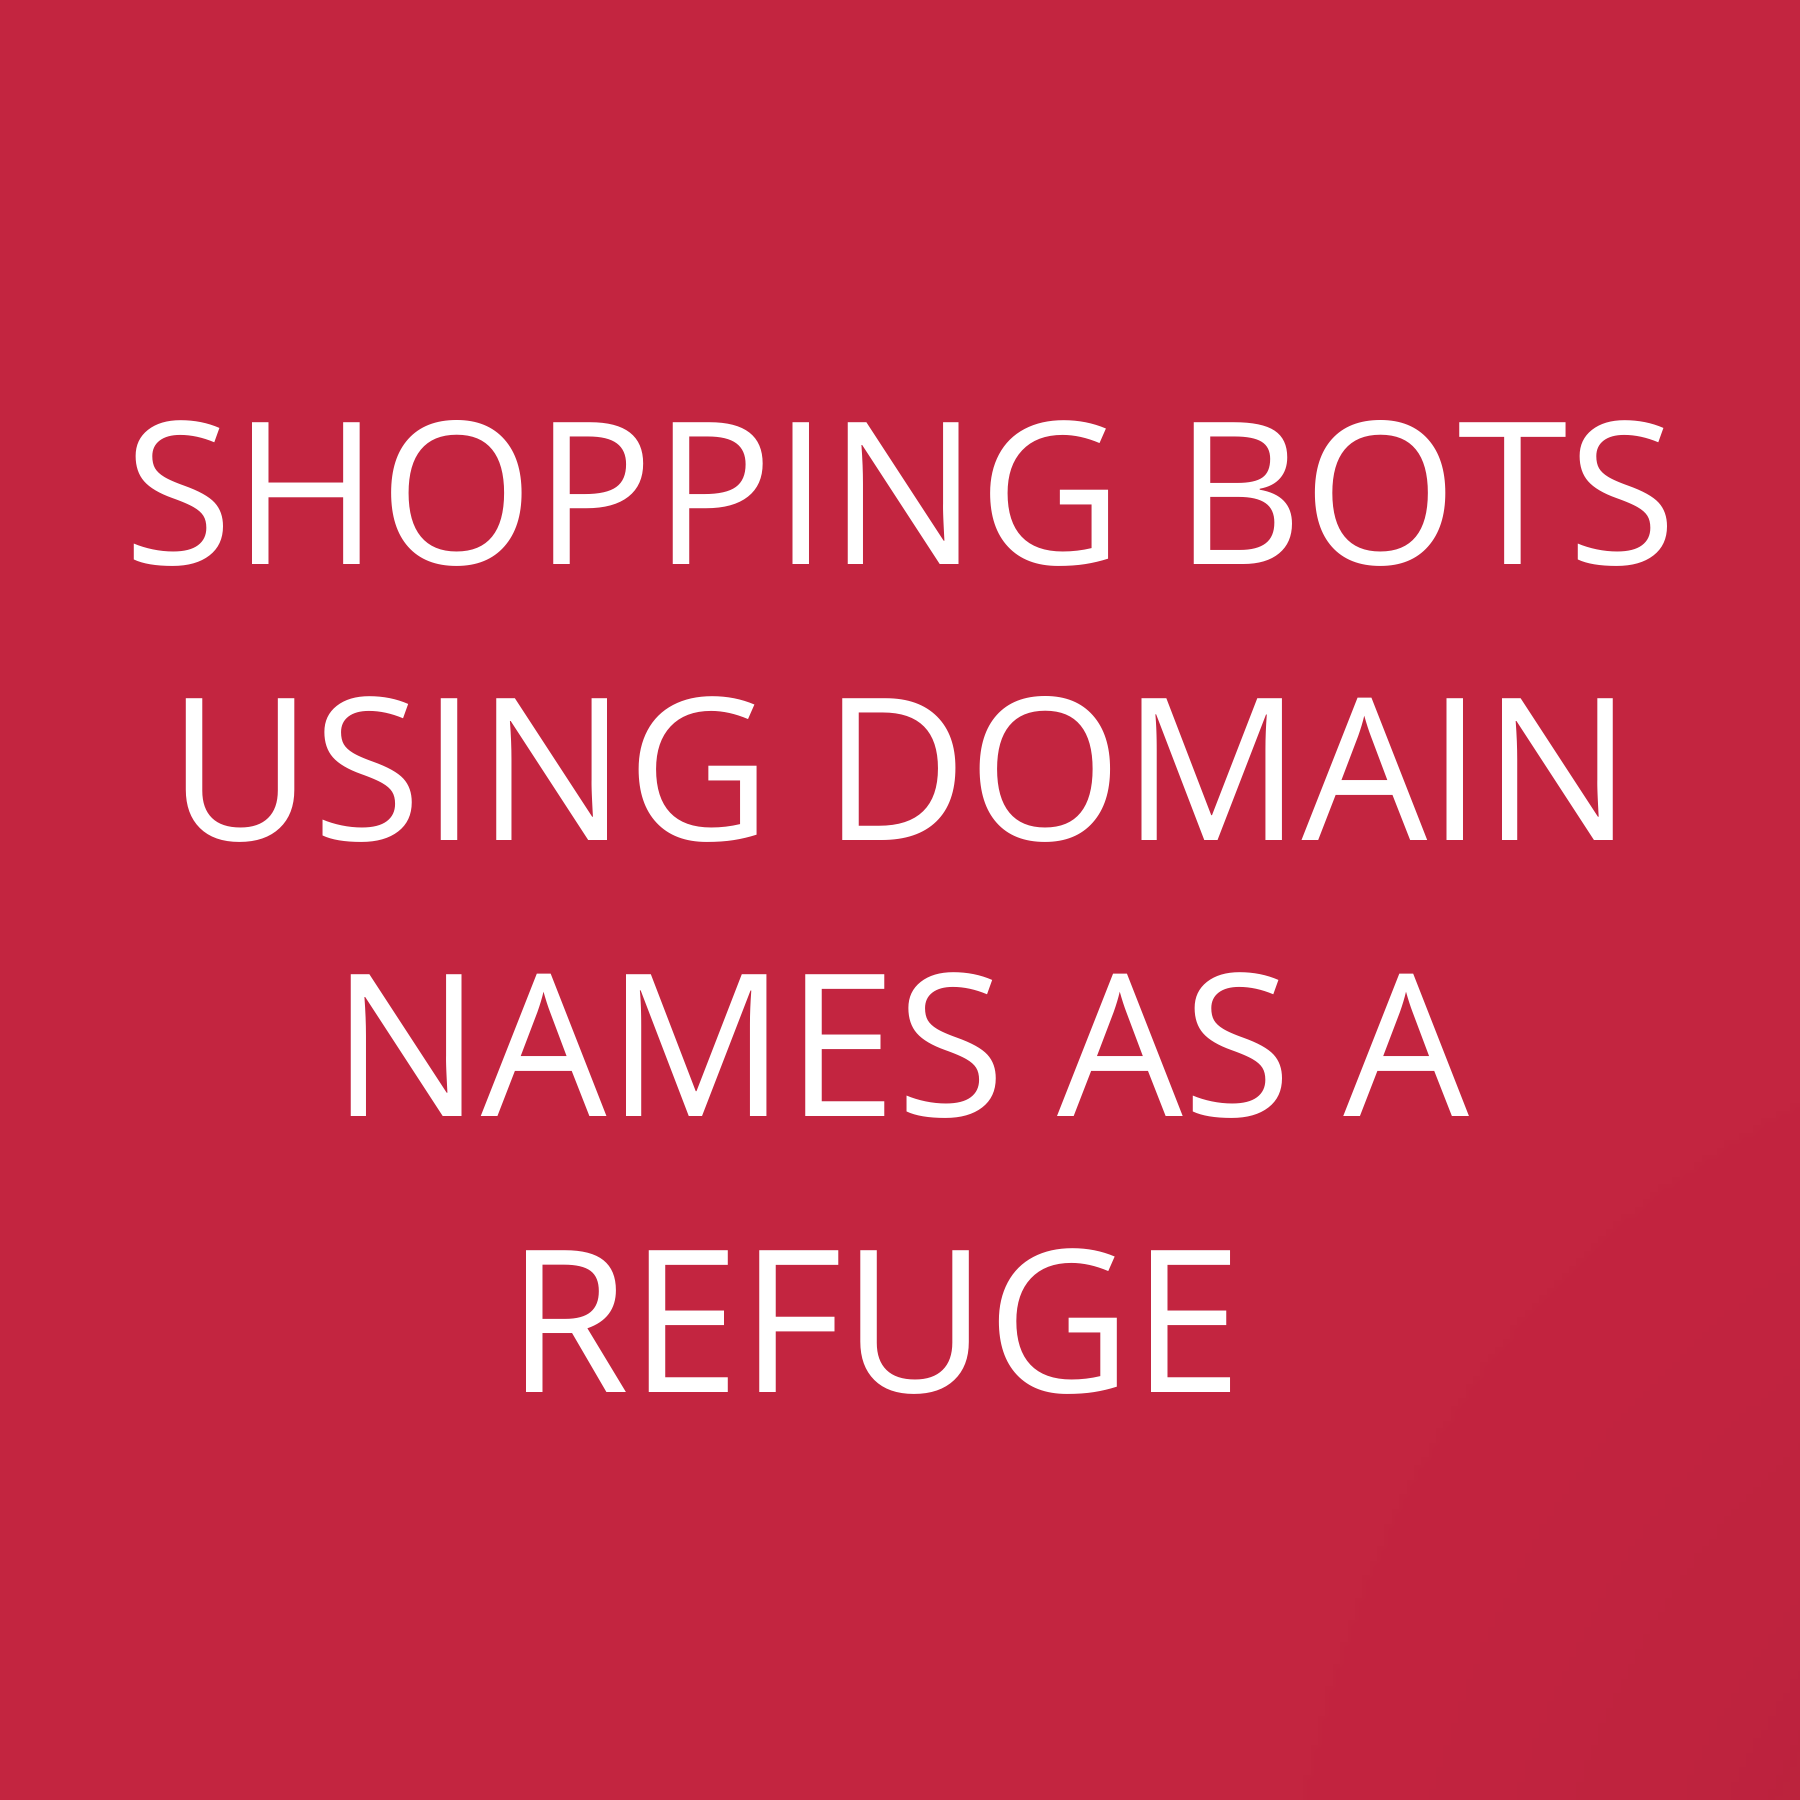 Shopping bots using domain names as a refuge